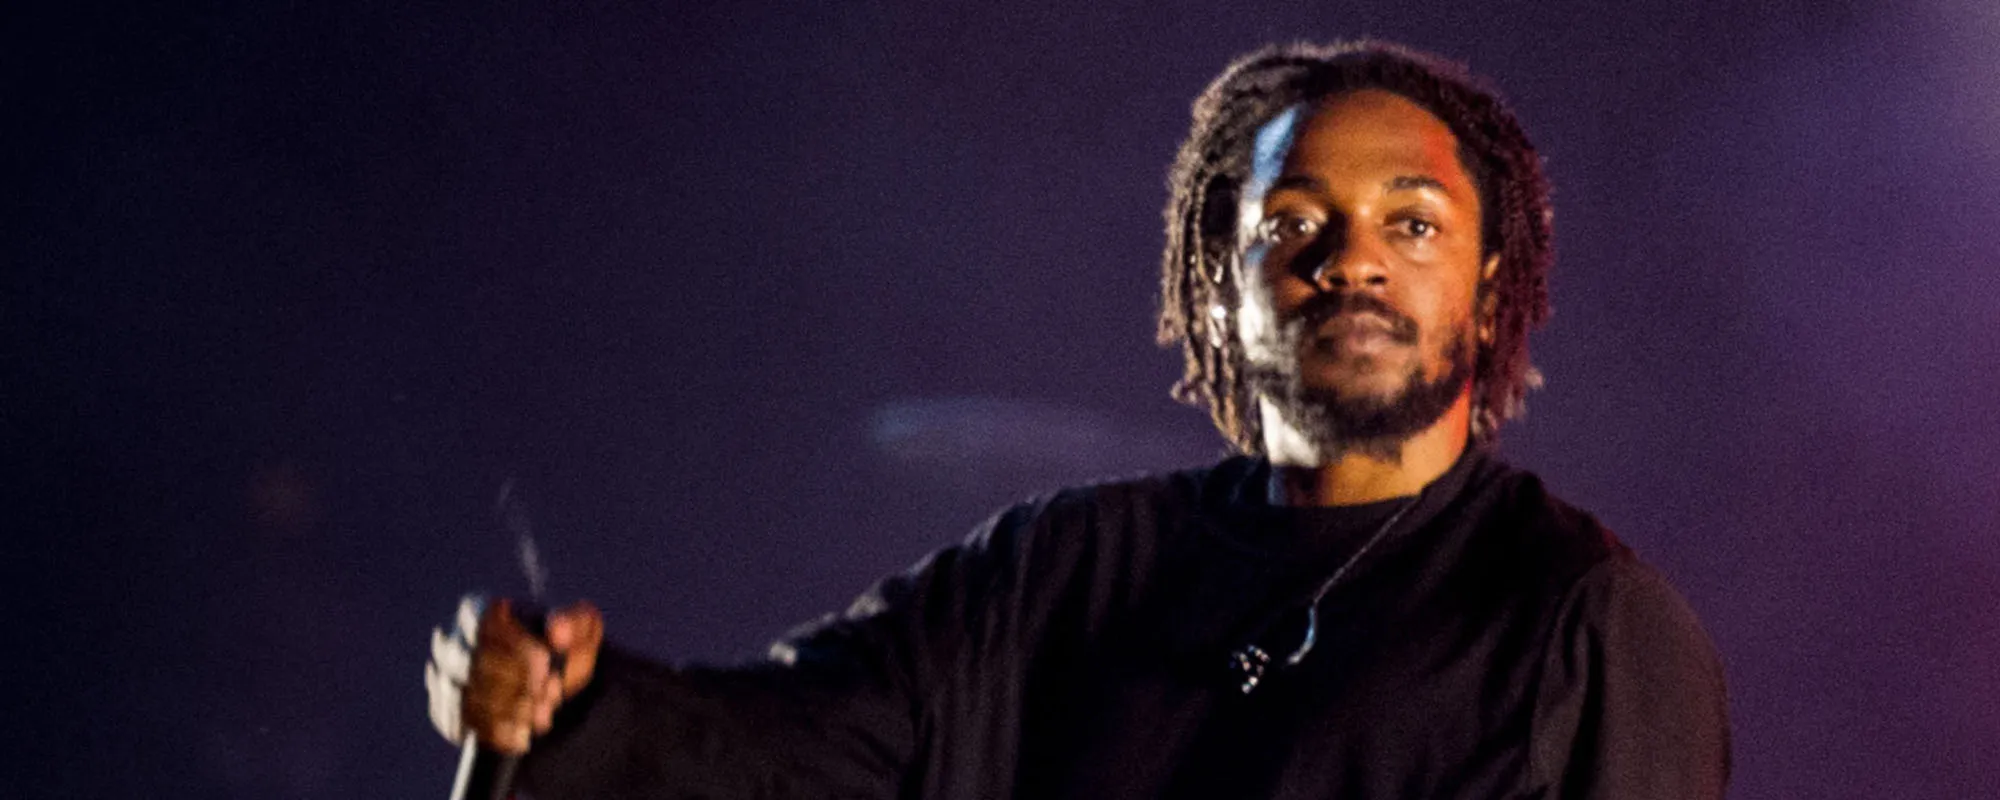 The Top 10 Kendrick Lamar Songs